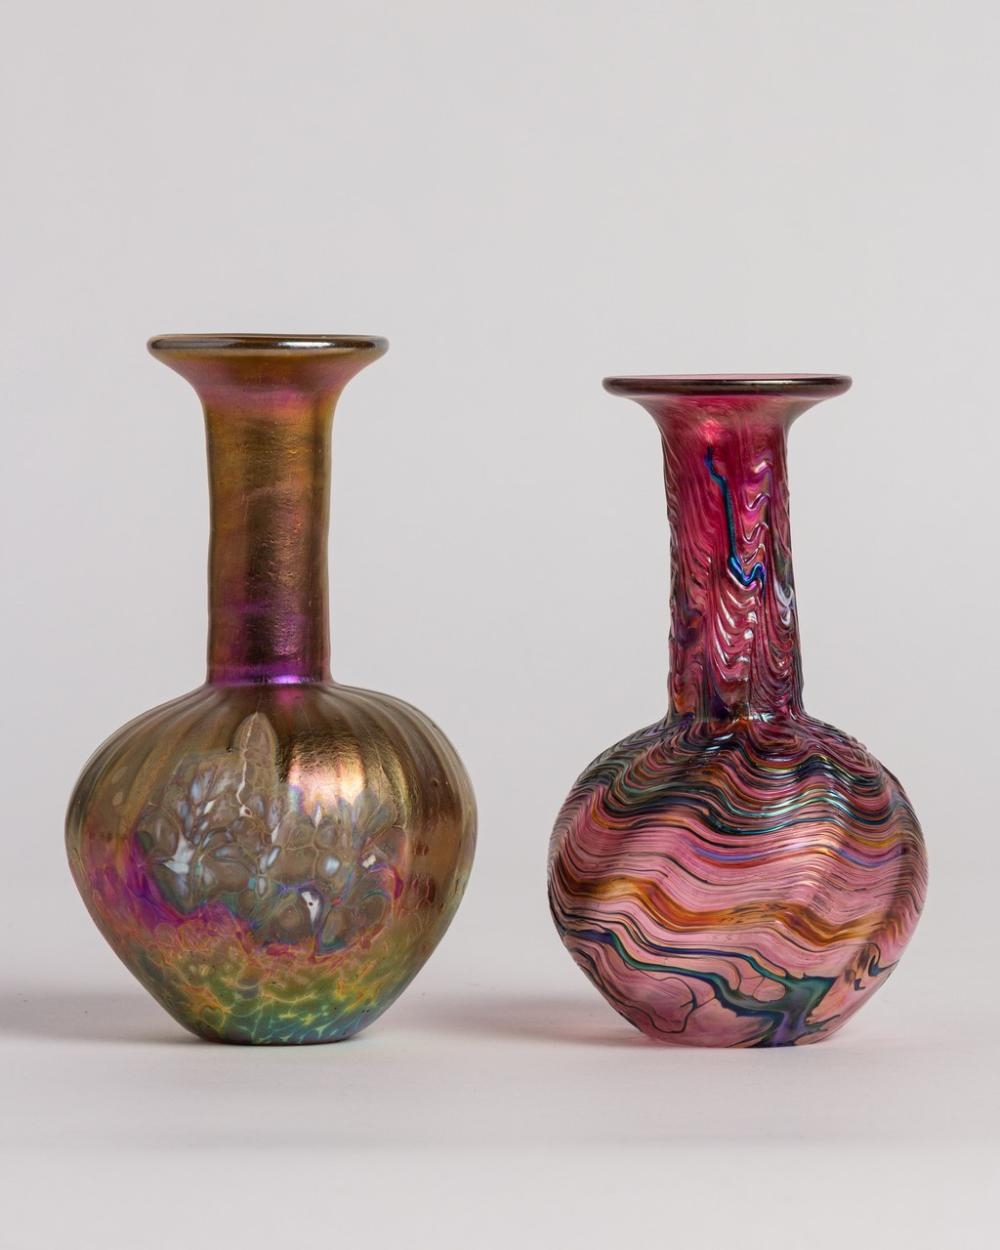 Robert Held, Small vases